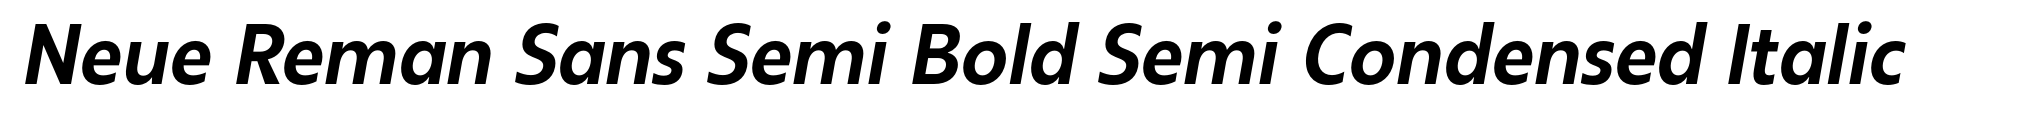 Neue Reman Sans Semi Bold Semi Condensed Italic image